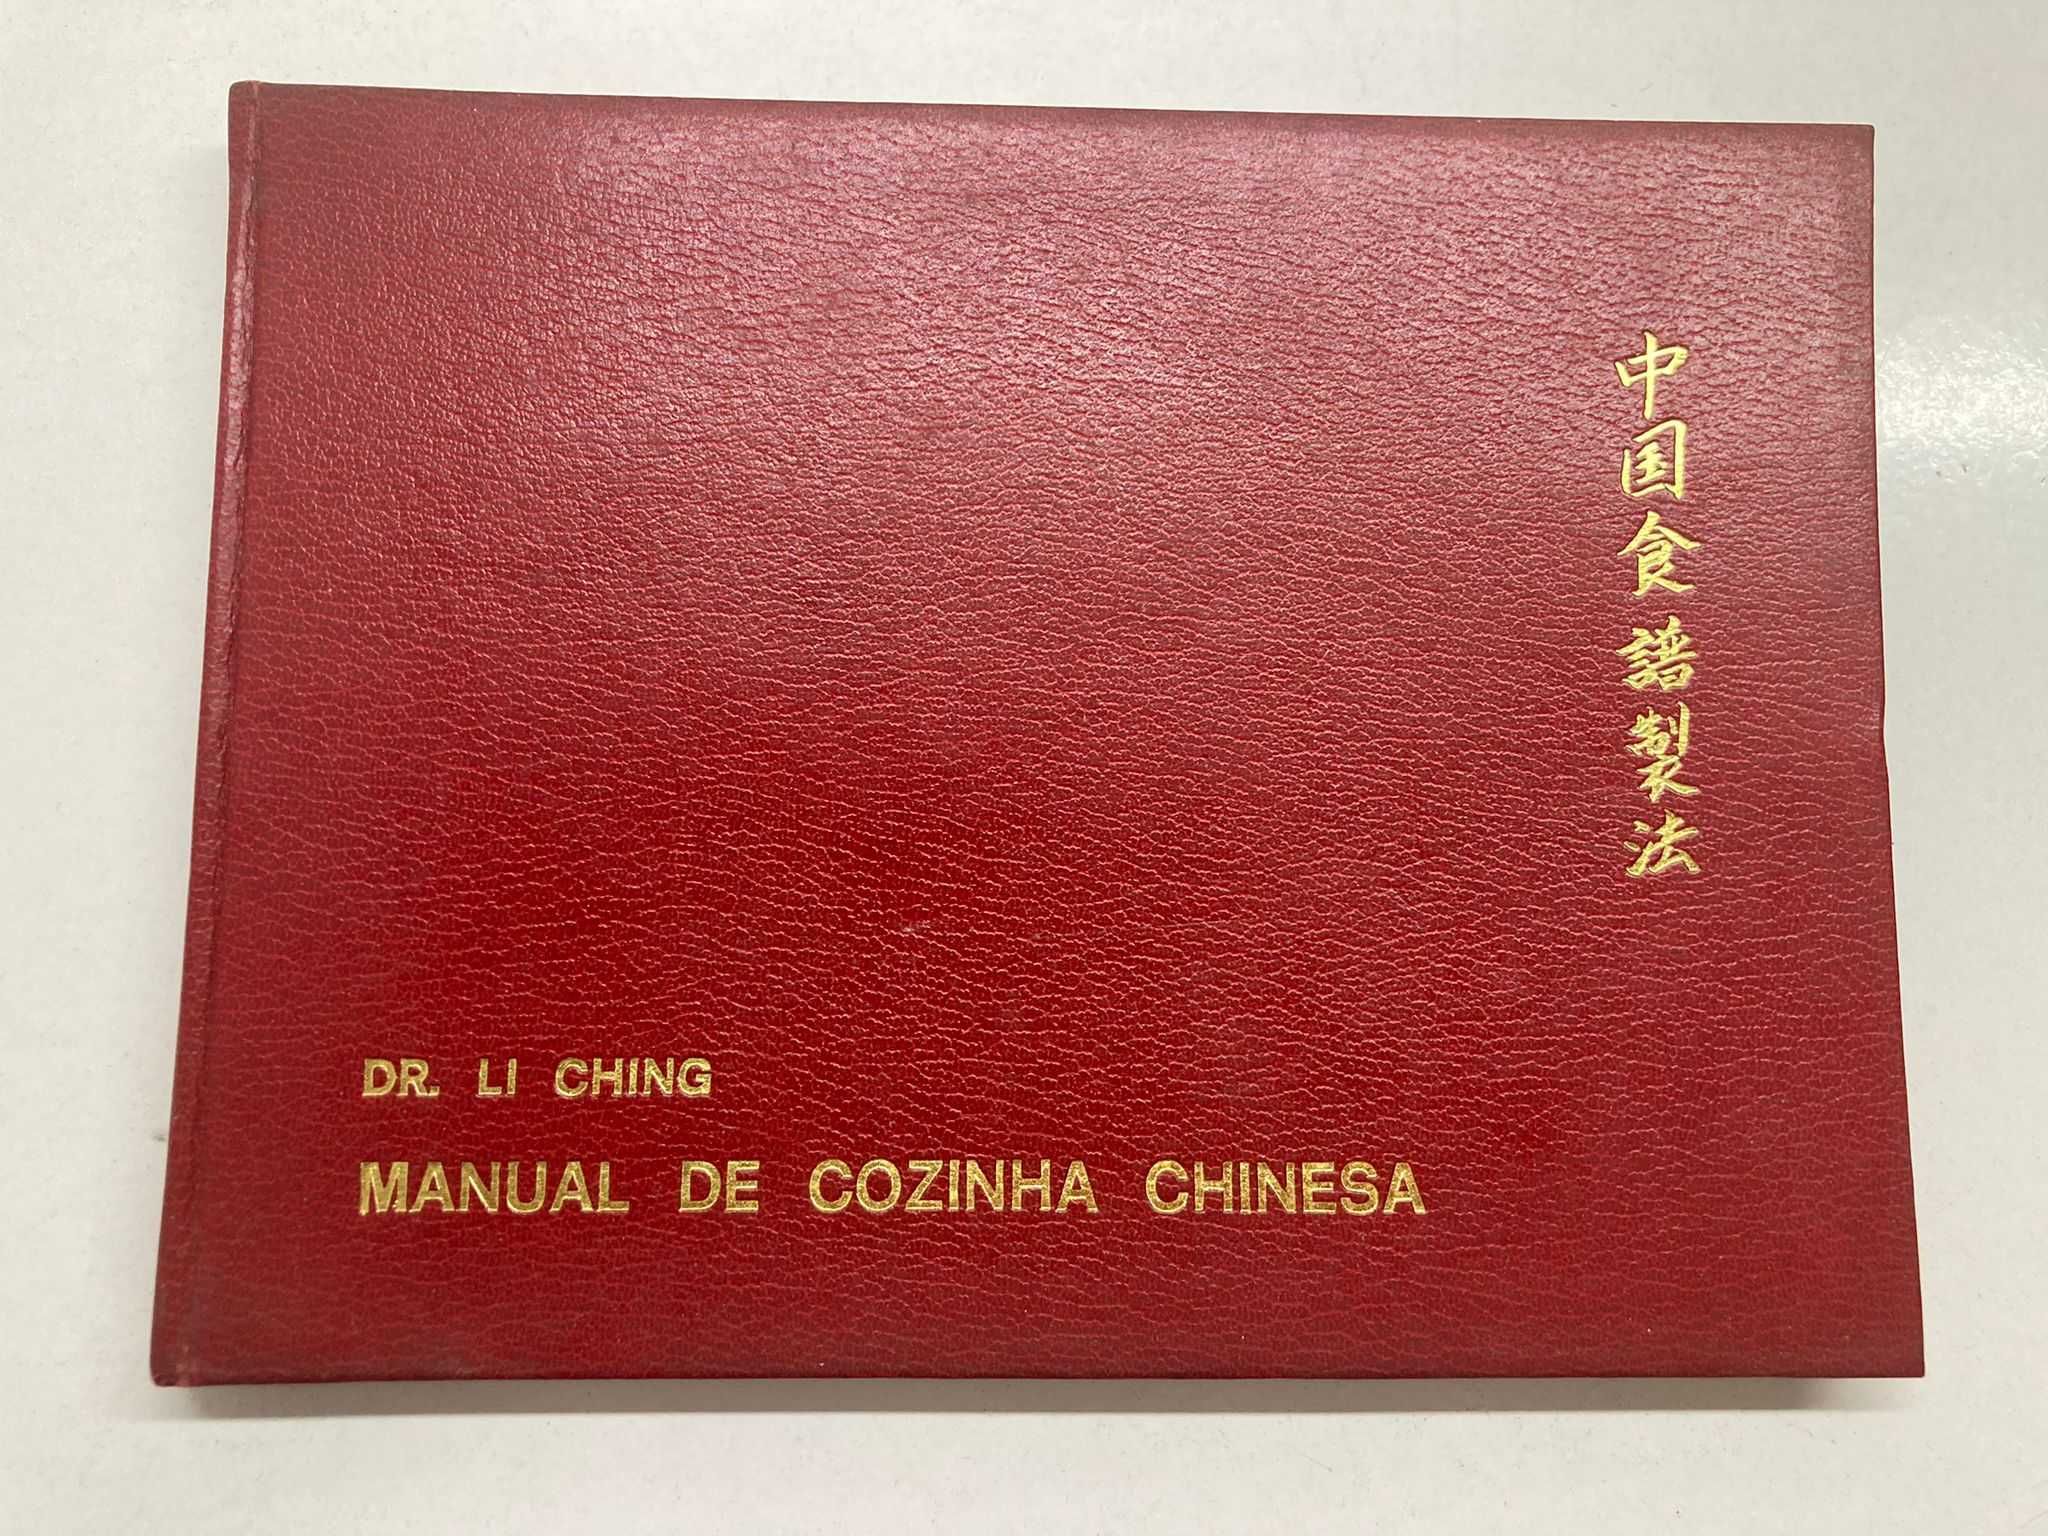 Livro - Manual de Cozinha Chinesa (Dr. Li Ching)